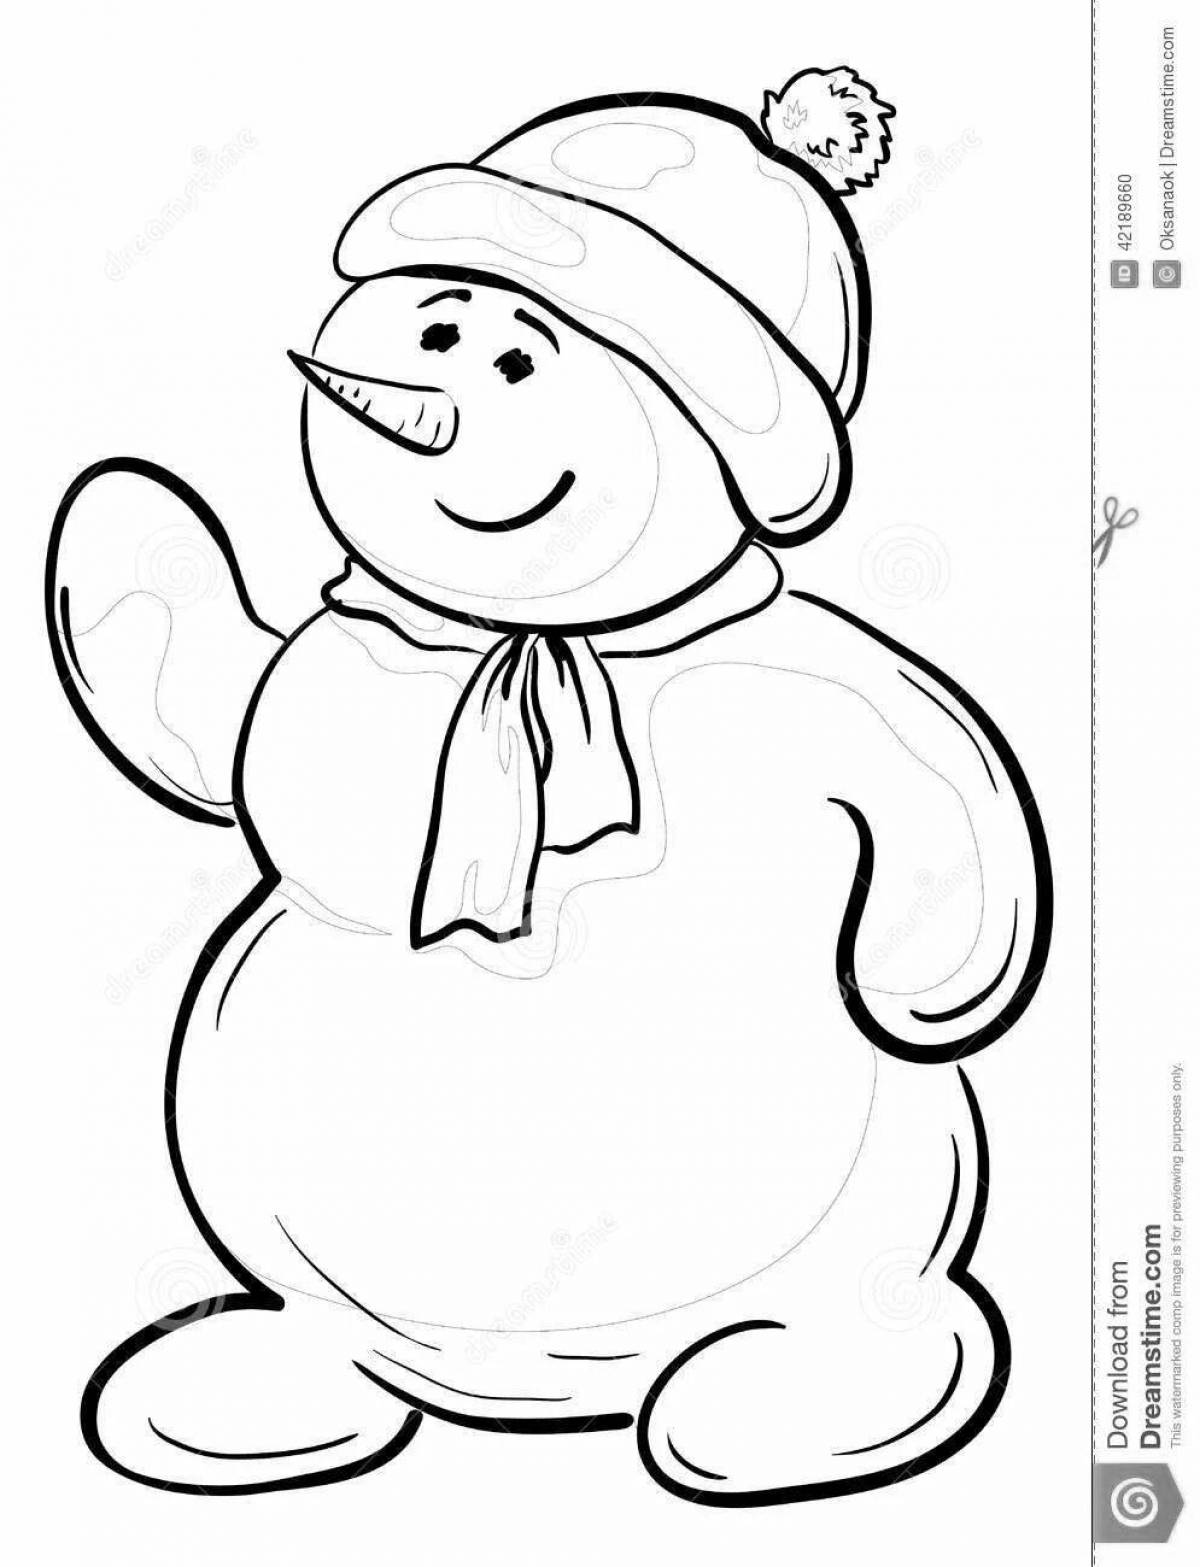 Radiant coloring page снеговик в шапке